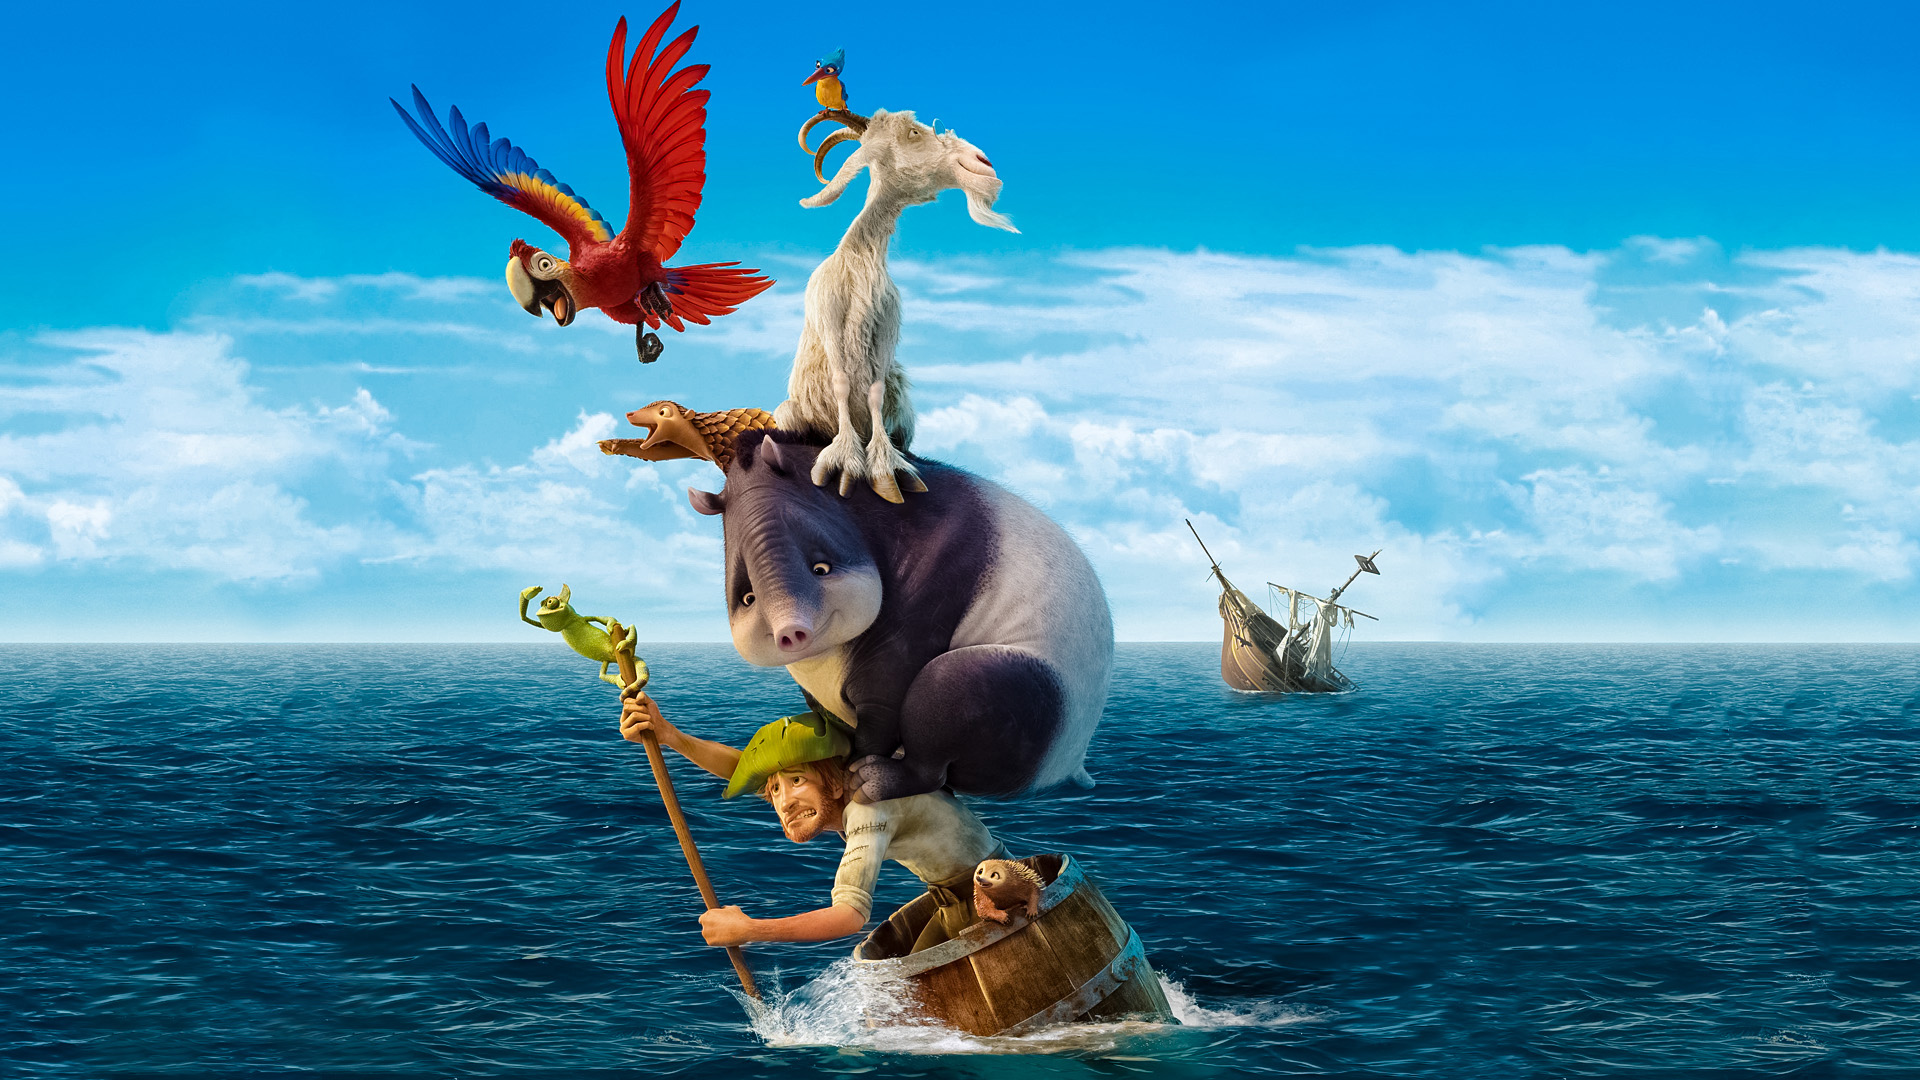 Movie Robinson Crusoe: The Wild Life HD Wallpaper | Background Image